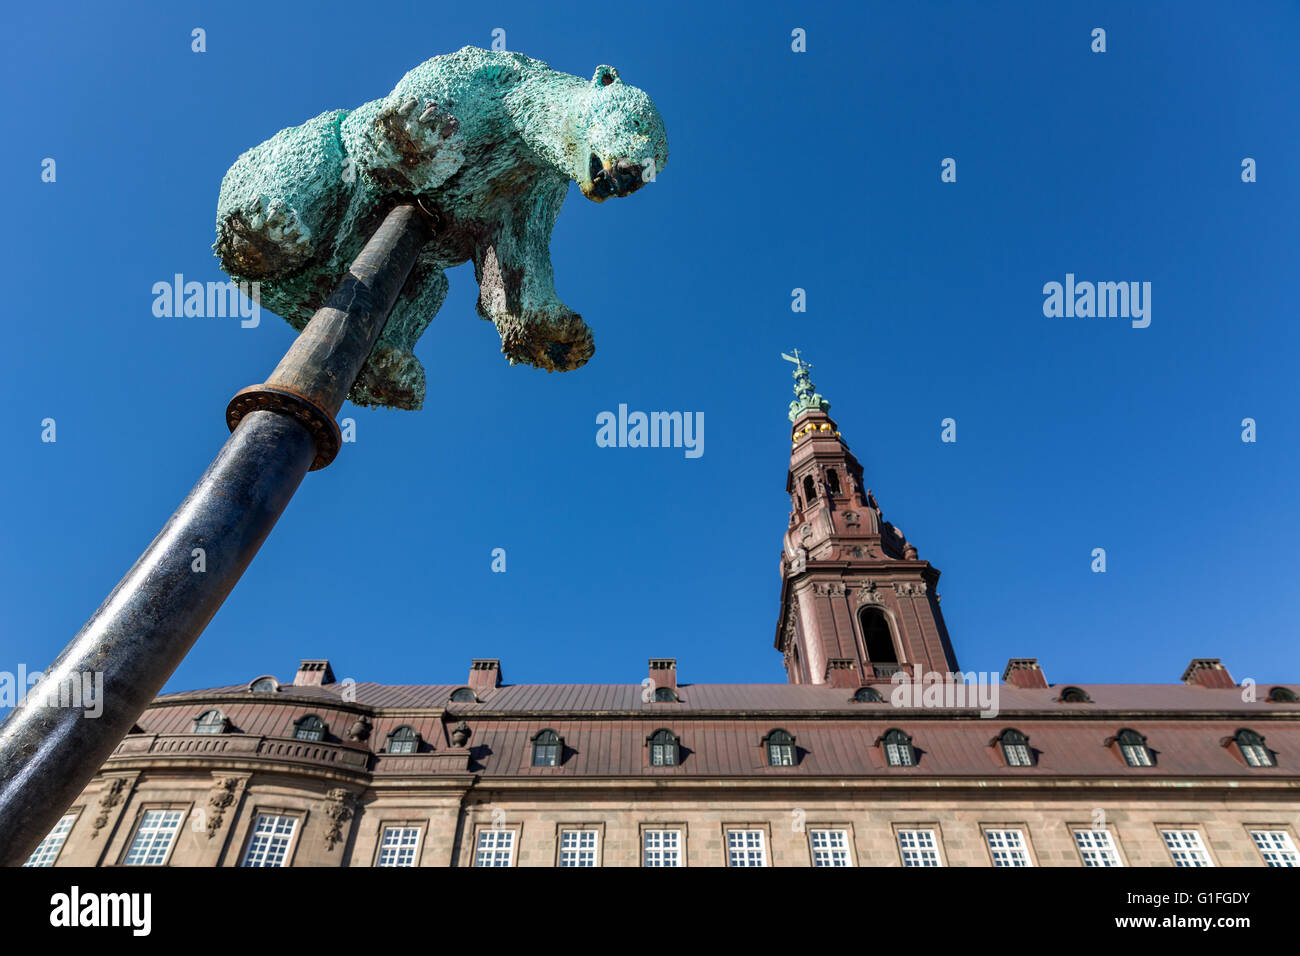 La scultura "insopportabile' di fronte al Parlamento danese, Slotsholmen, Copenhagen, Danimarca Foto Stock